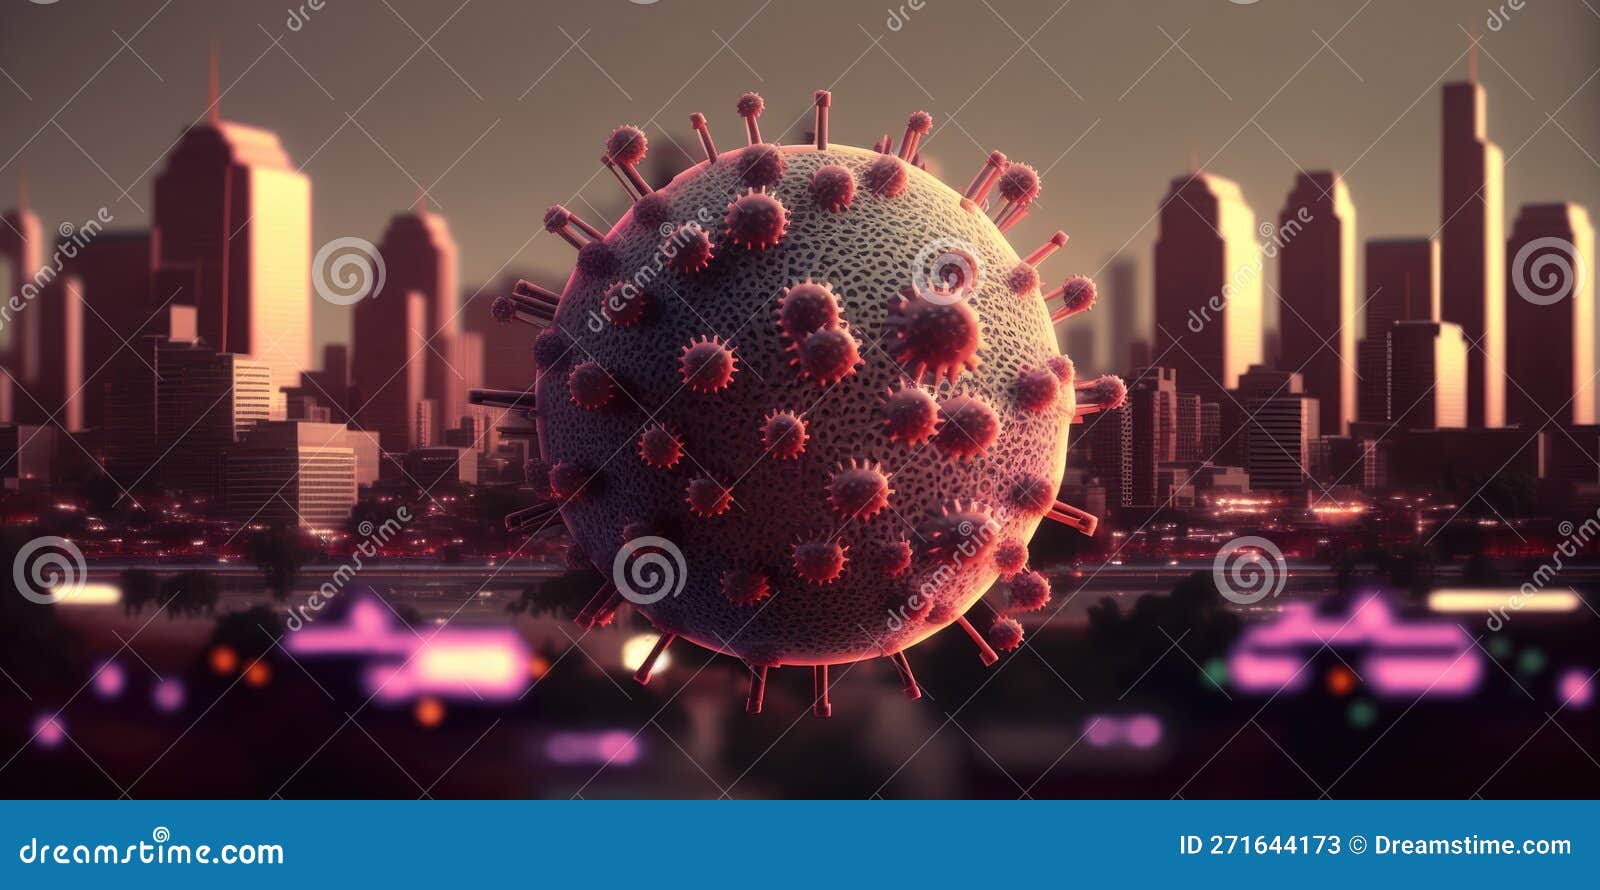 coronaviruses floating over a city